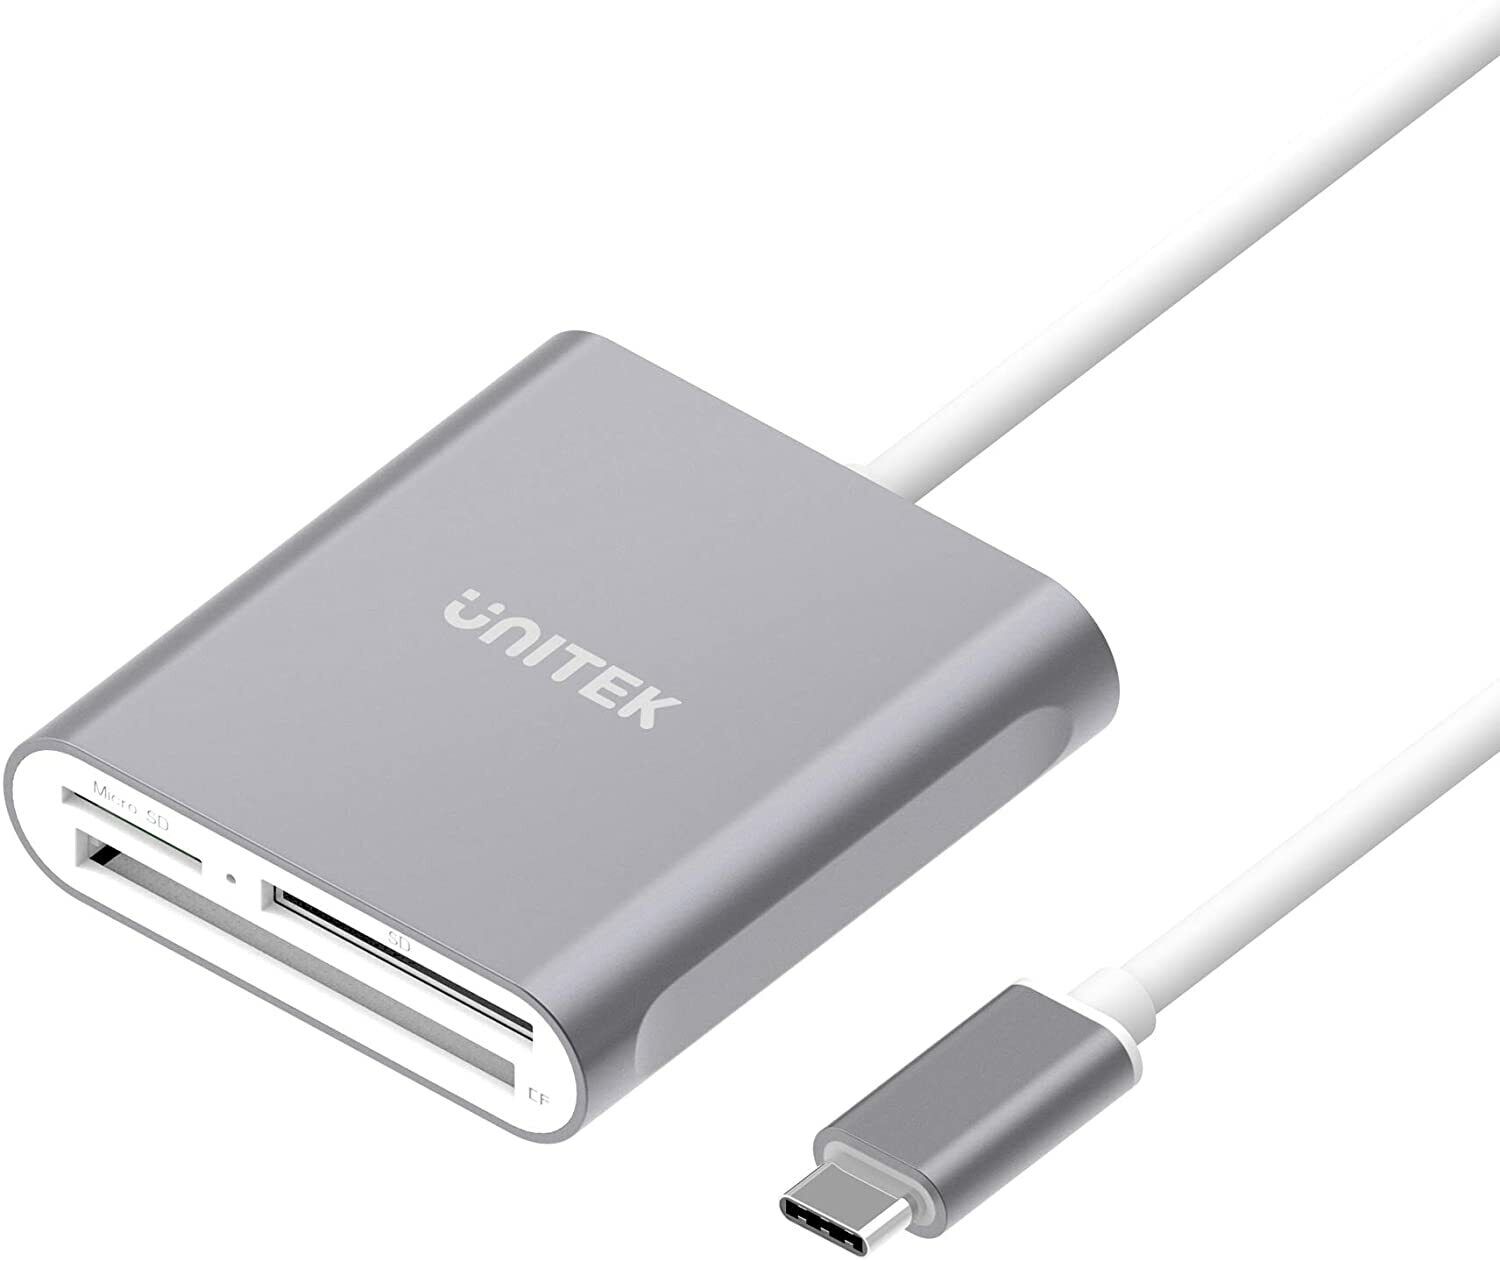 Unitek USB C SD Card Reader, Aluminum 3-Slot USB 3.0 Type-C Flash Memory